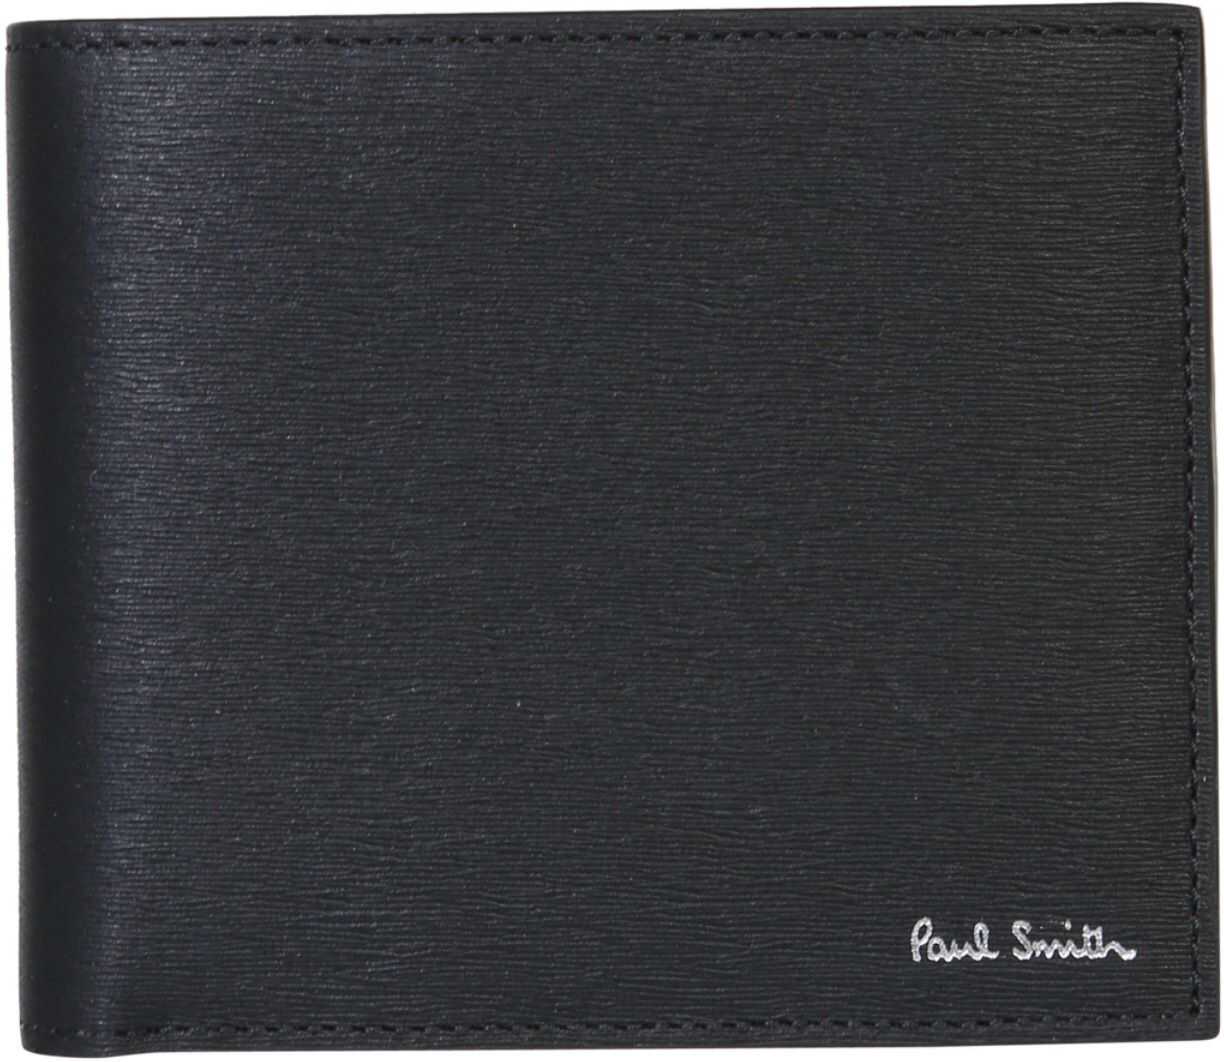 Paul Smith Bifold Wallet BLACK